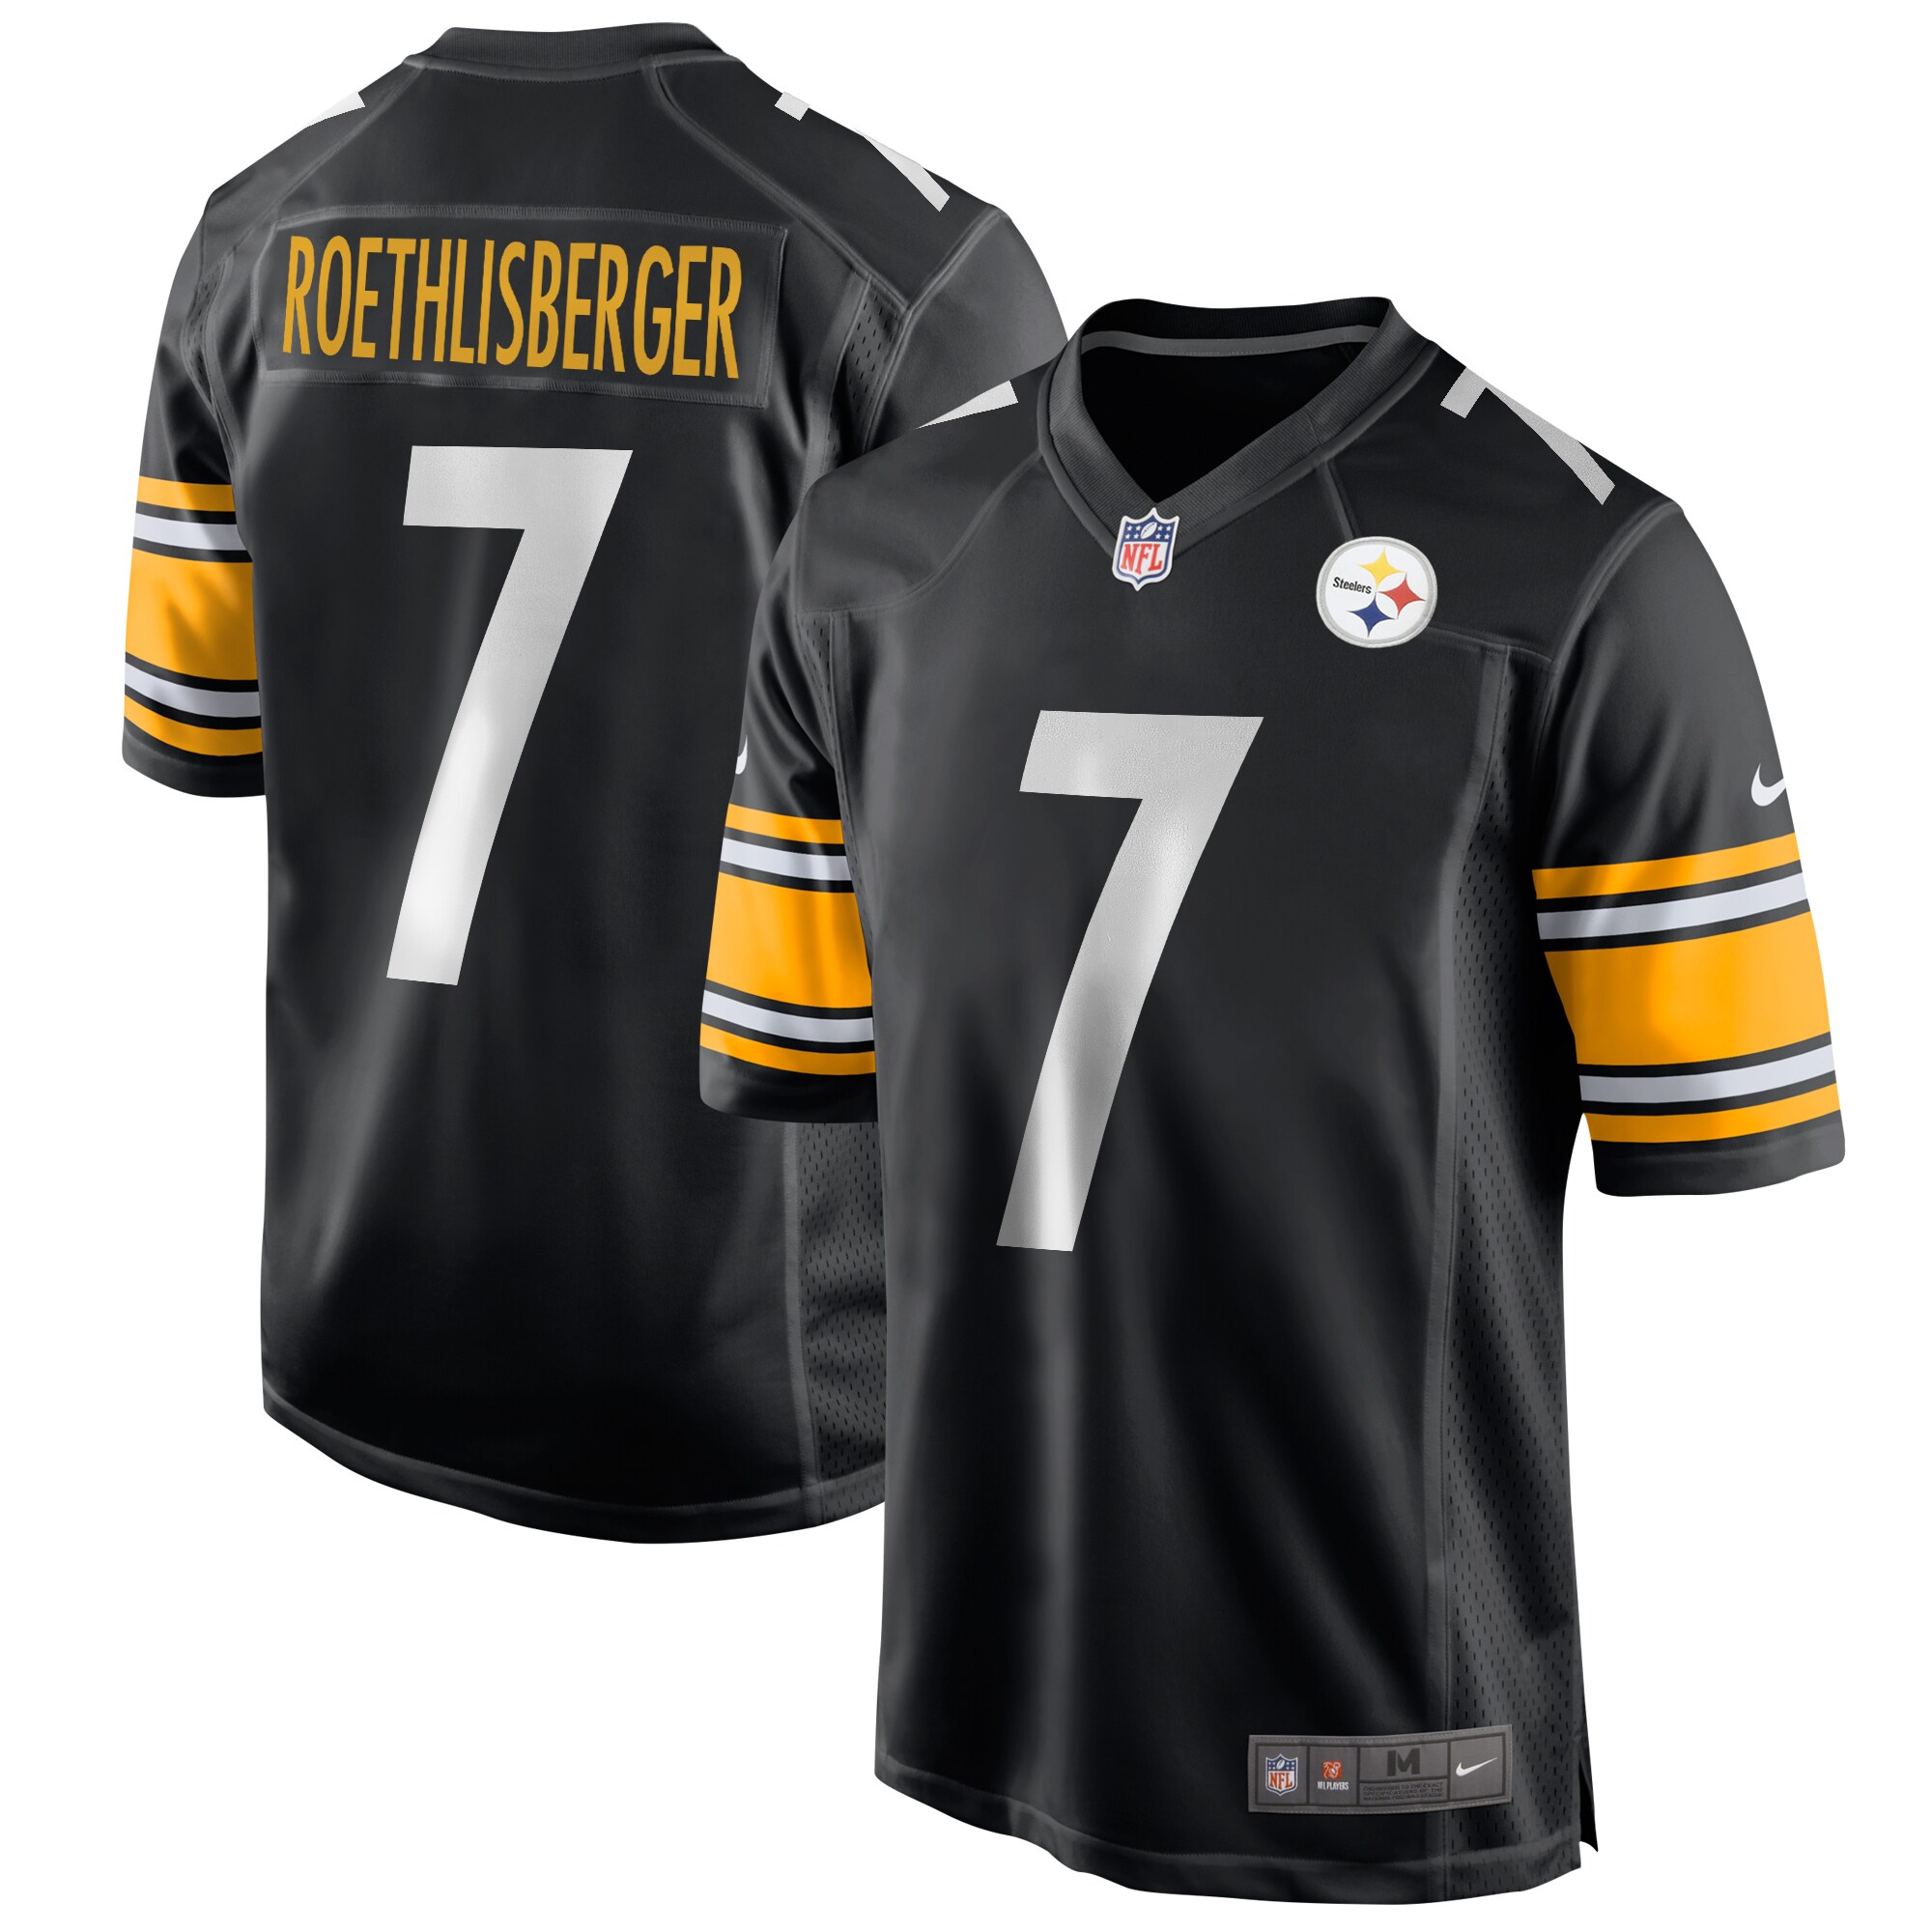 Men's Pittsburgh Steelers Ben Roethlisberger Nike Black Team Game Jersey